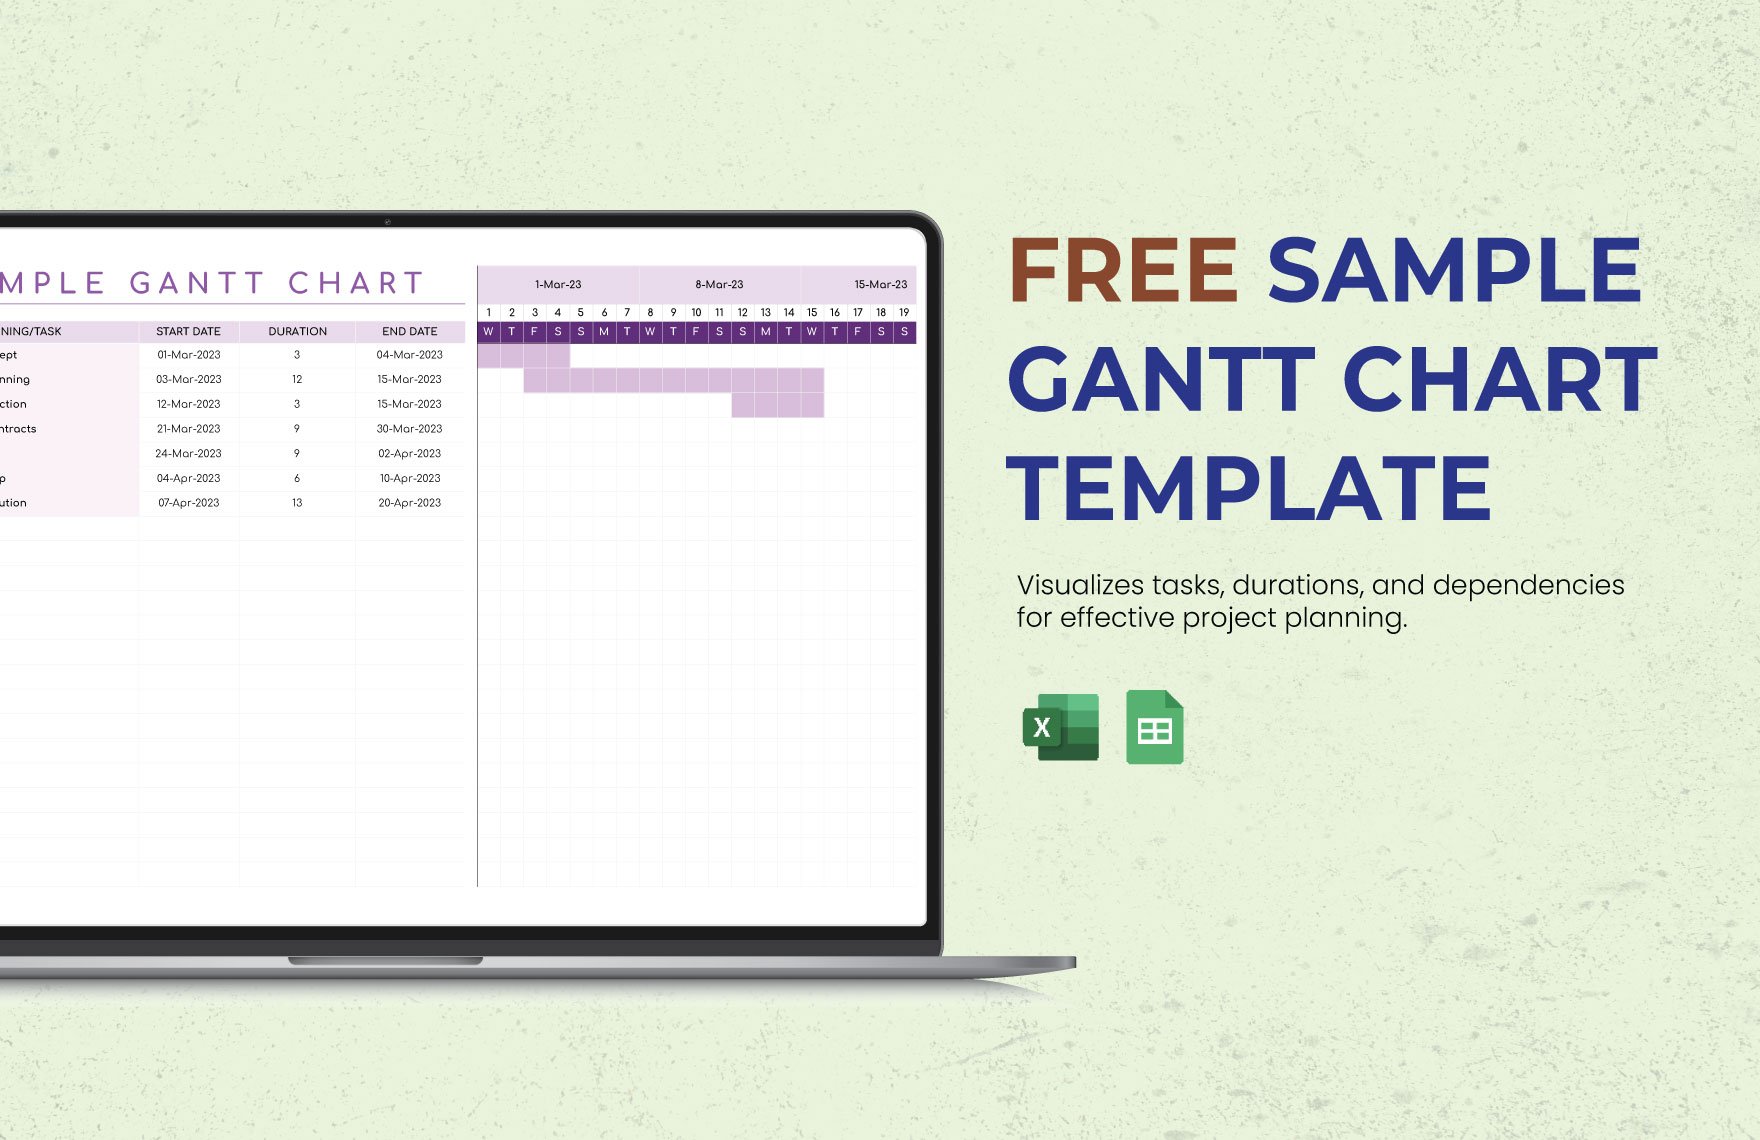 Sample Gantt Chart Template